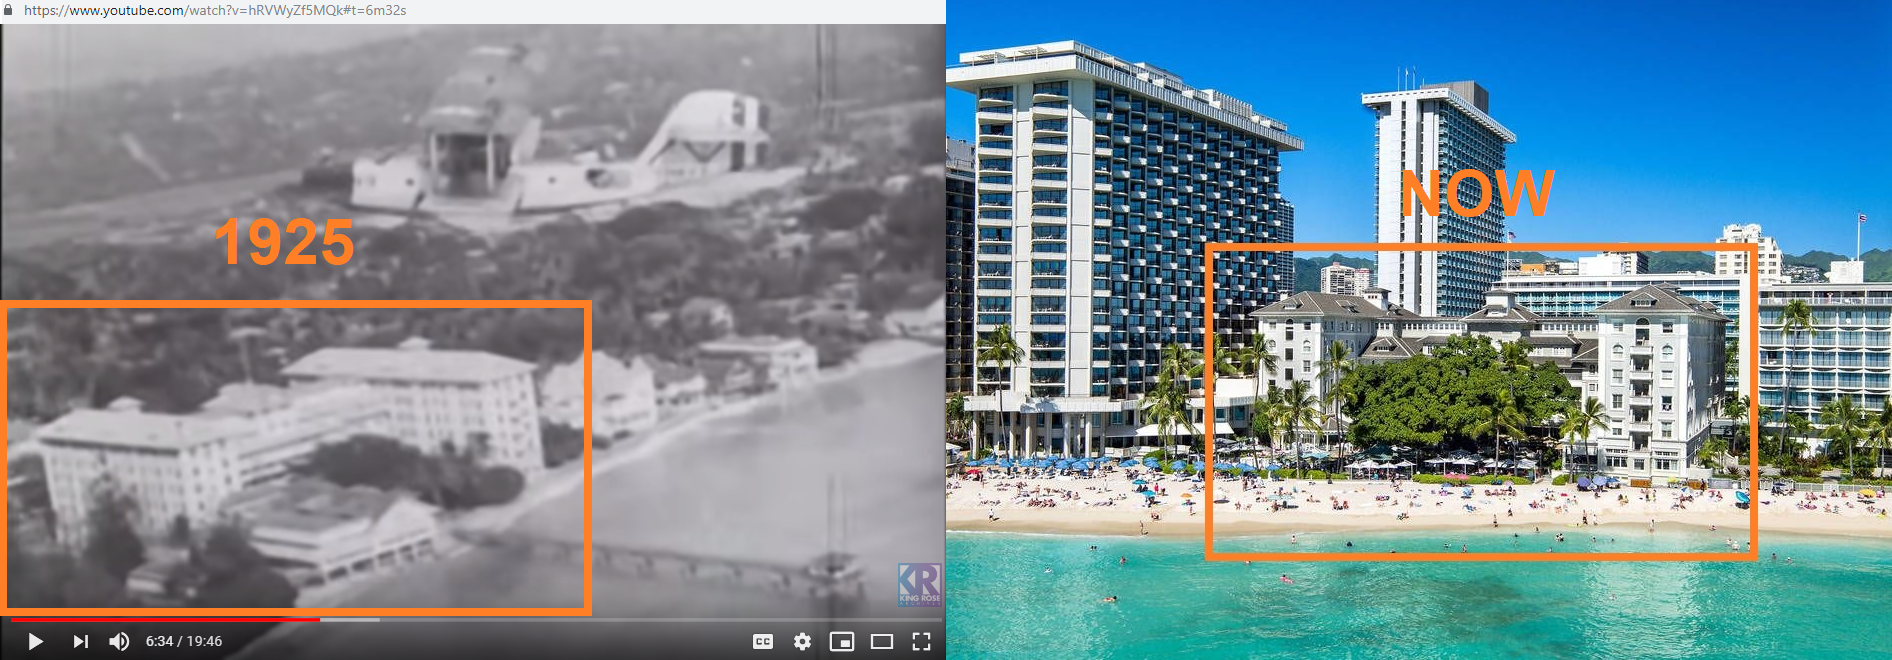 Moana Surfrider Hotel in Honolulu, 1925 vs now